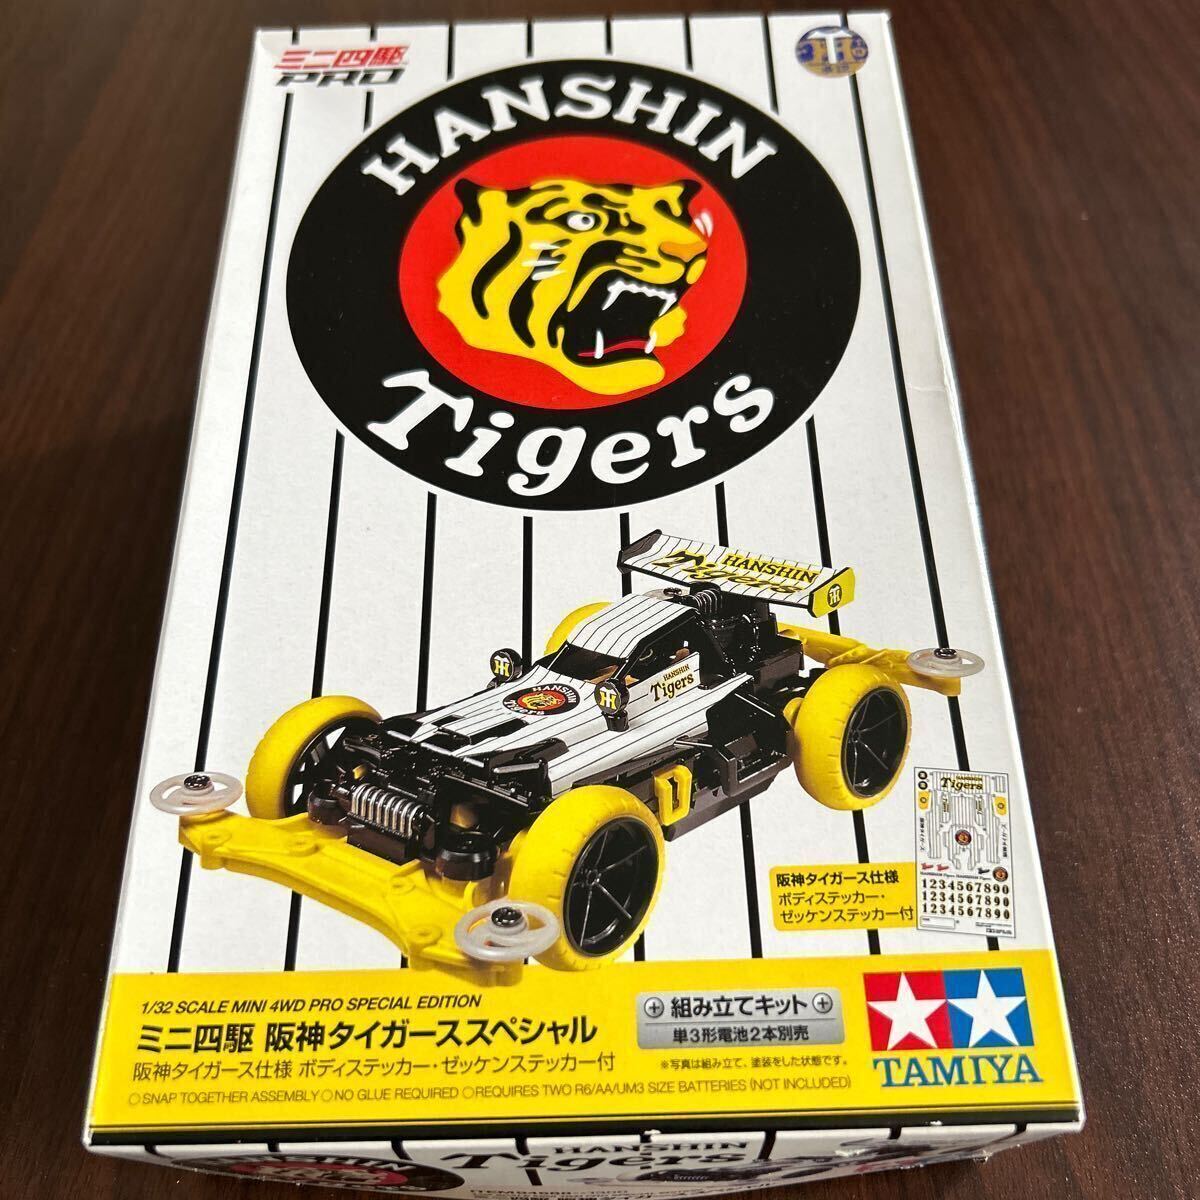  Mini 4WD Hanshin Tigers special almost new goods limitation 